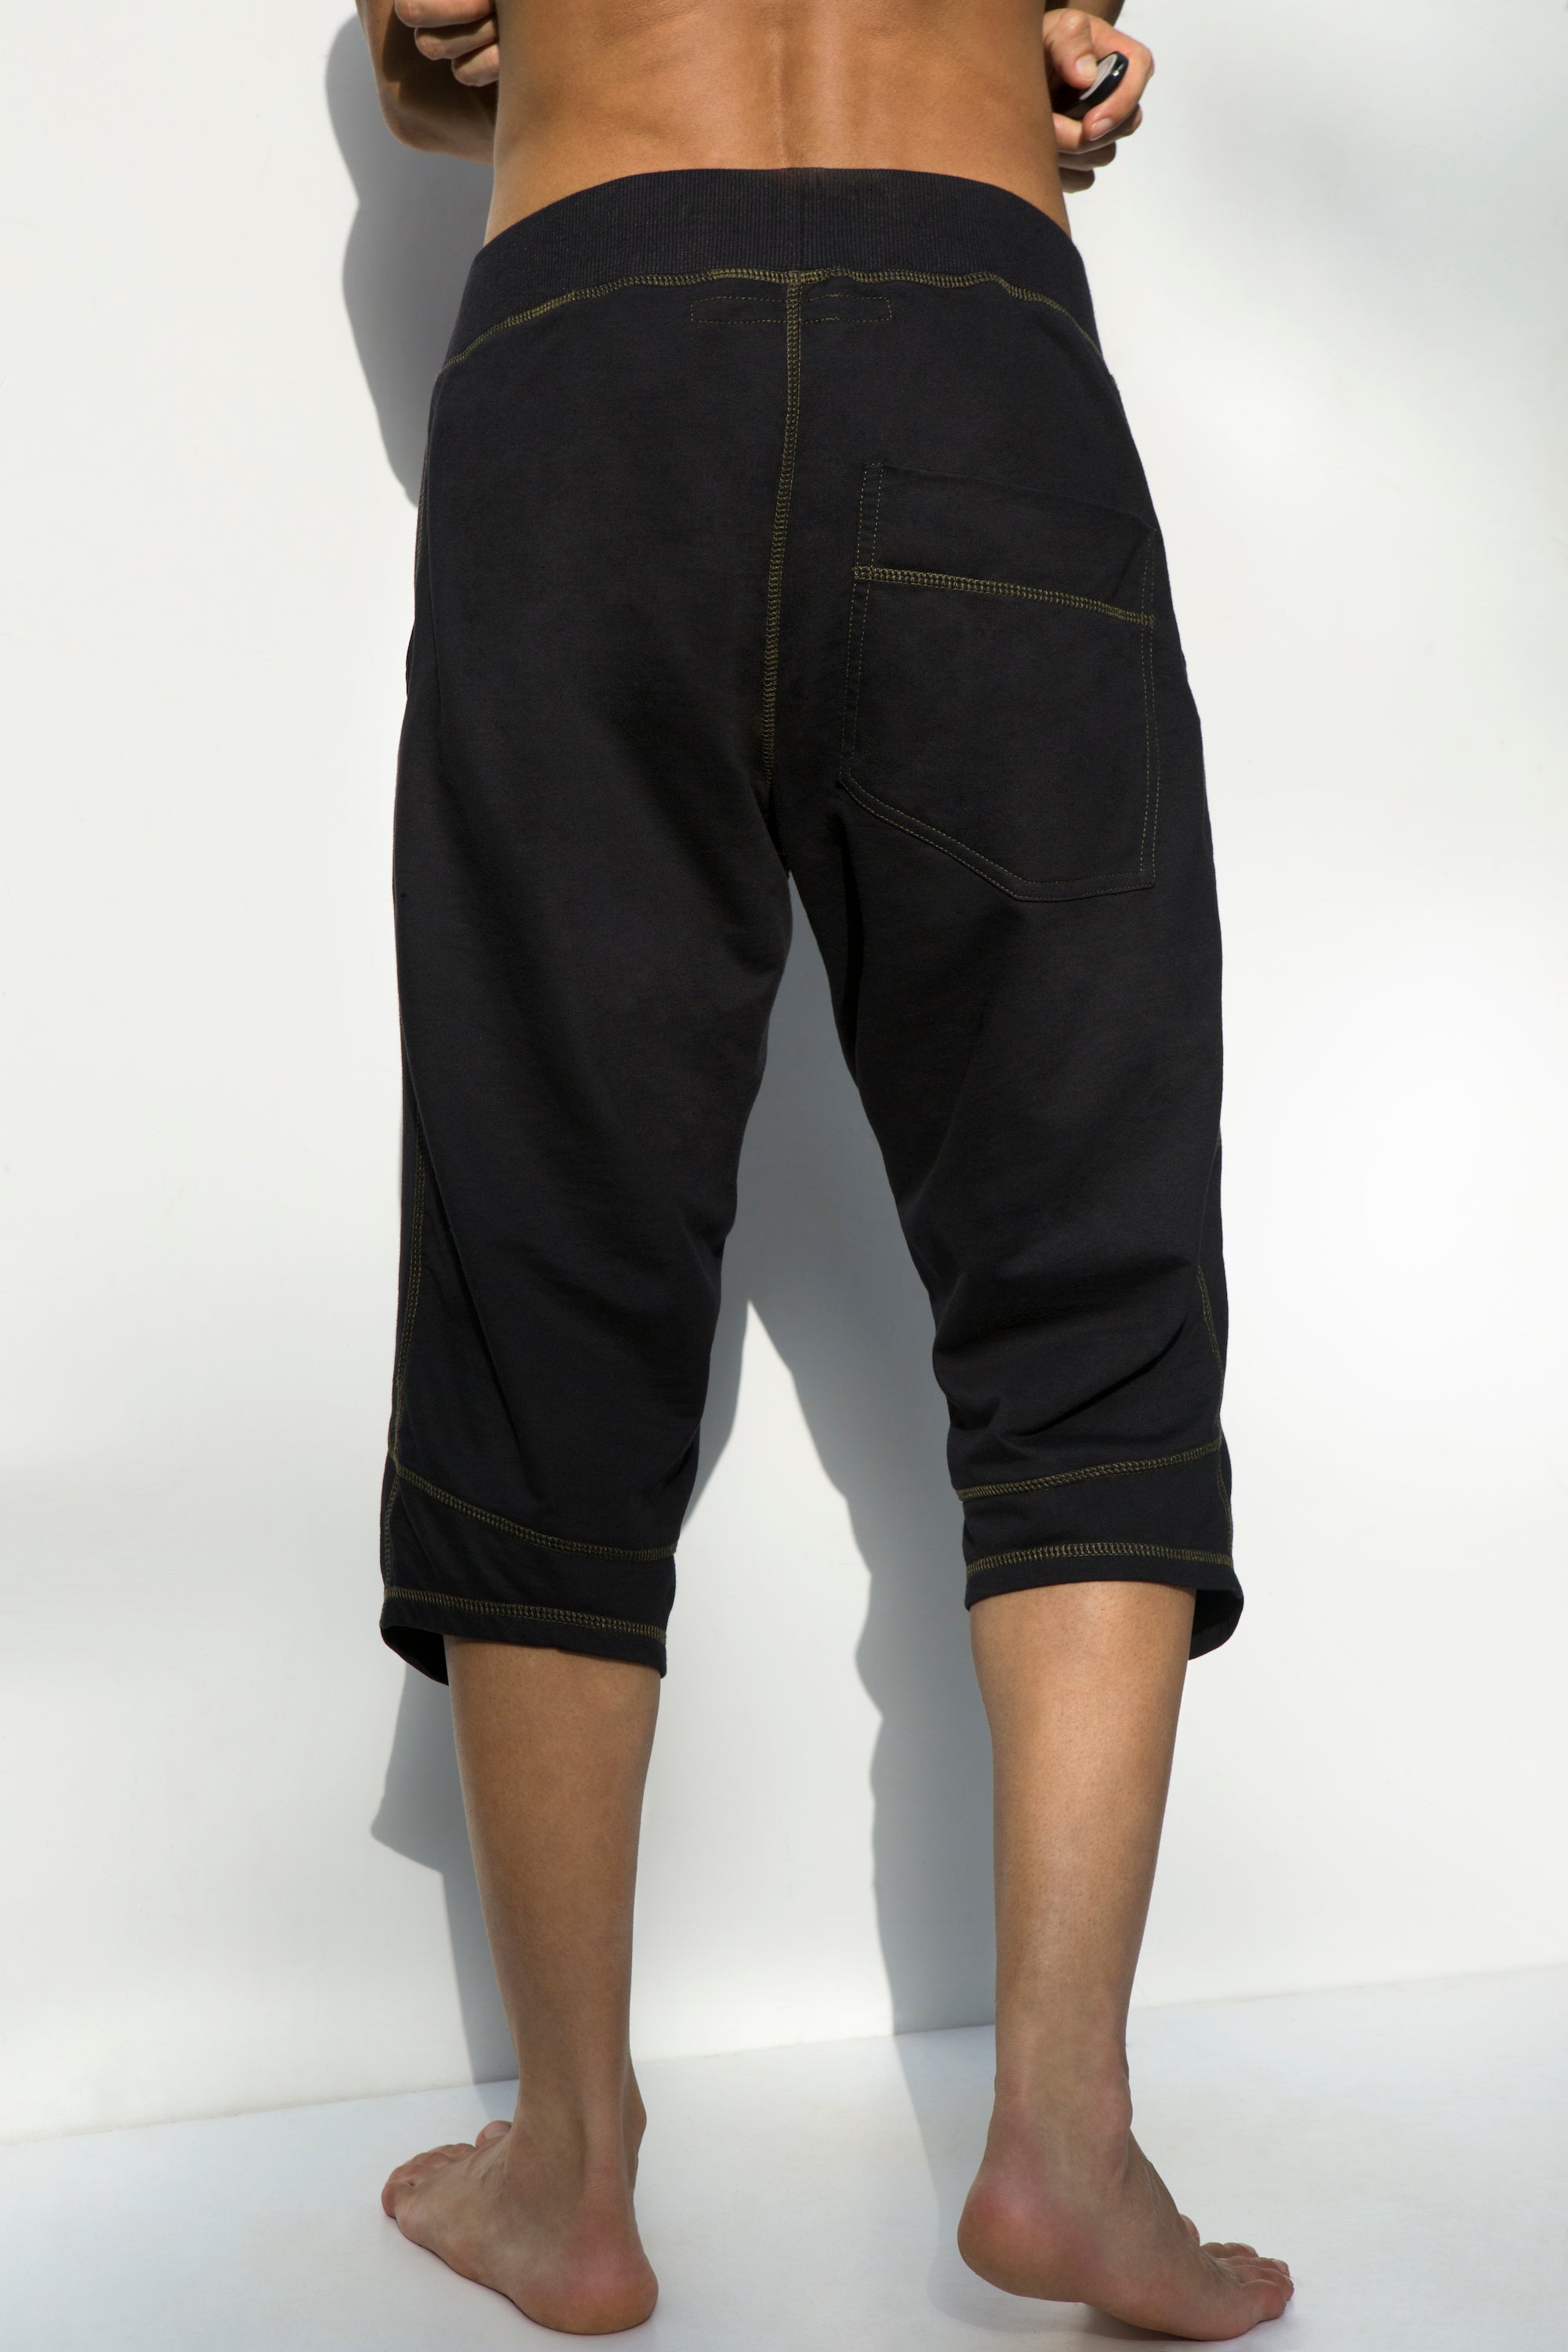 symoid Mens Capri Pants- Casual Slim Sweatpants Pants Calf-Length Linen  Trousers Baggy Harem Pants Wine XXXXL - Walmart.com